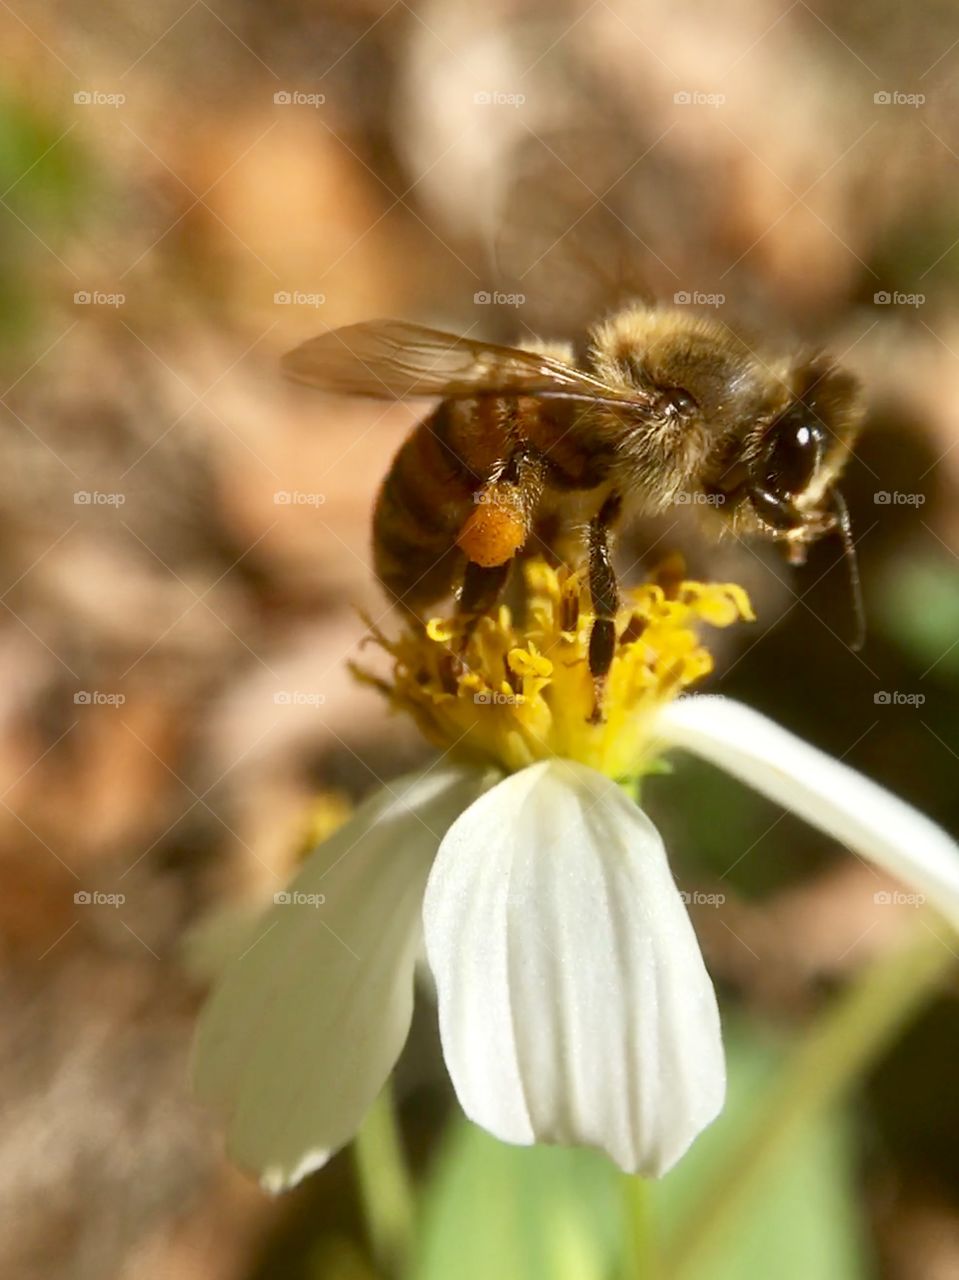 Pollinating...